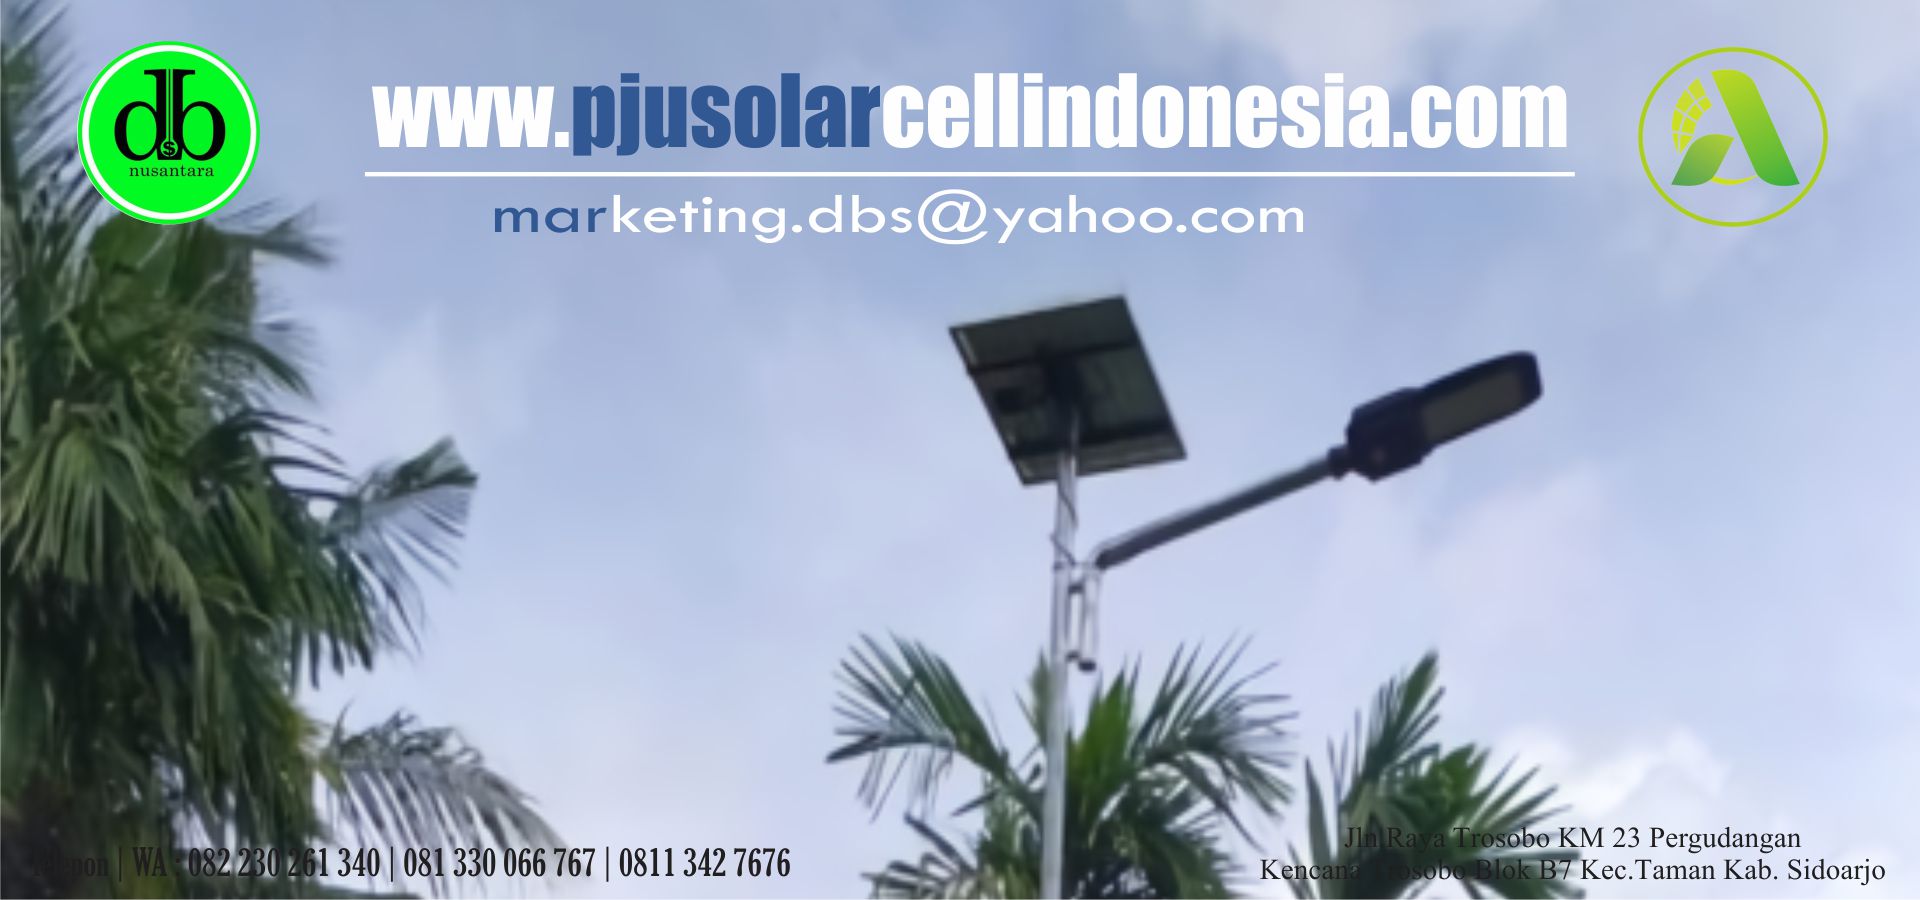 slider pju solar cell indonesia - 1